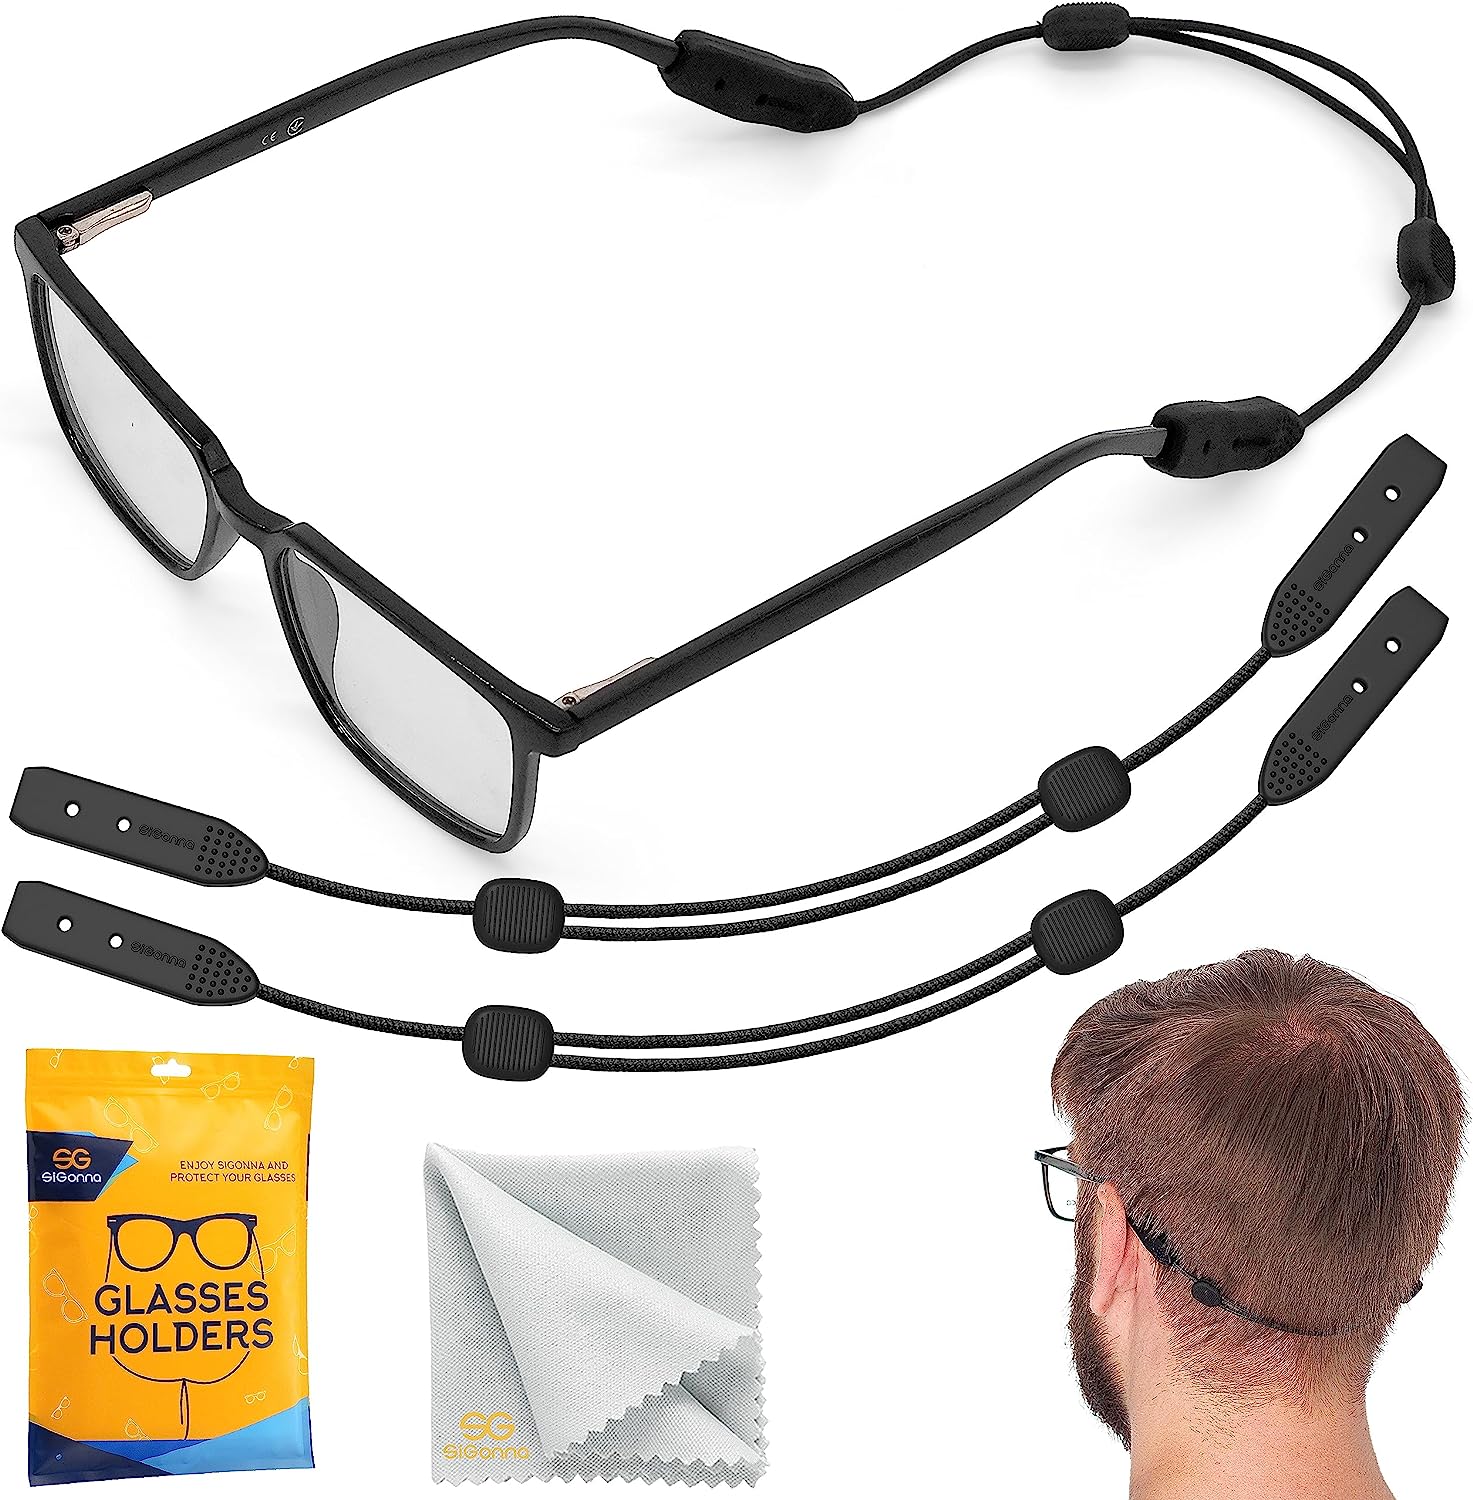 Glasses Strap Extra Flexible Cord